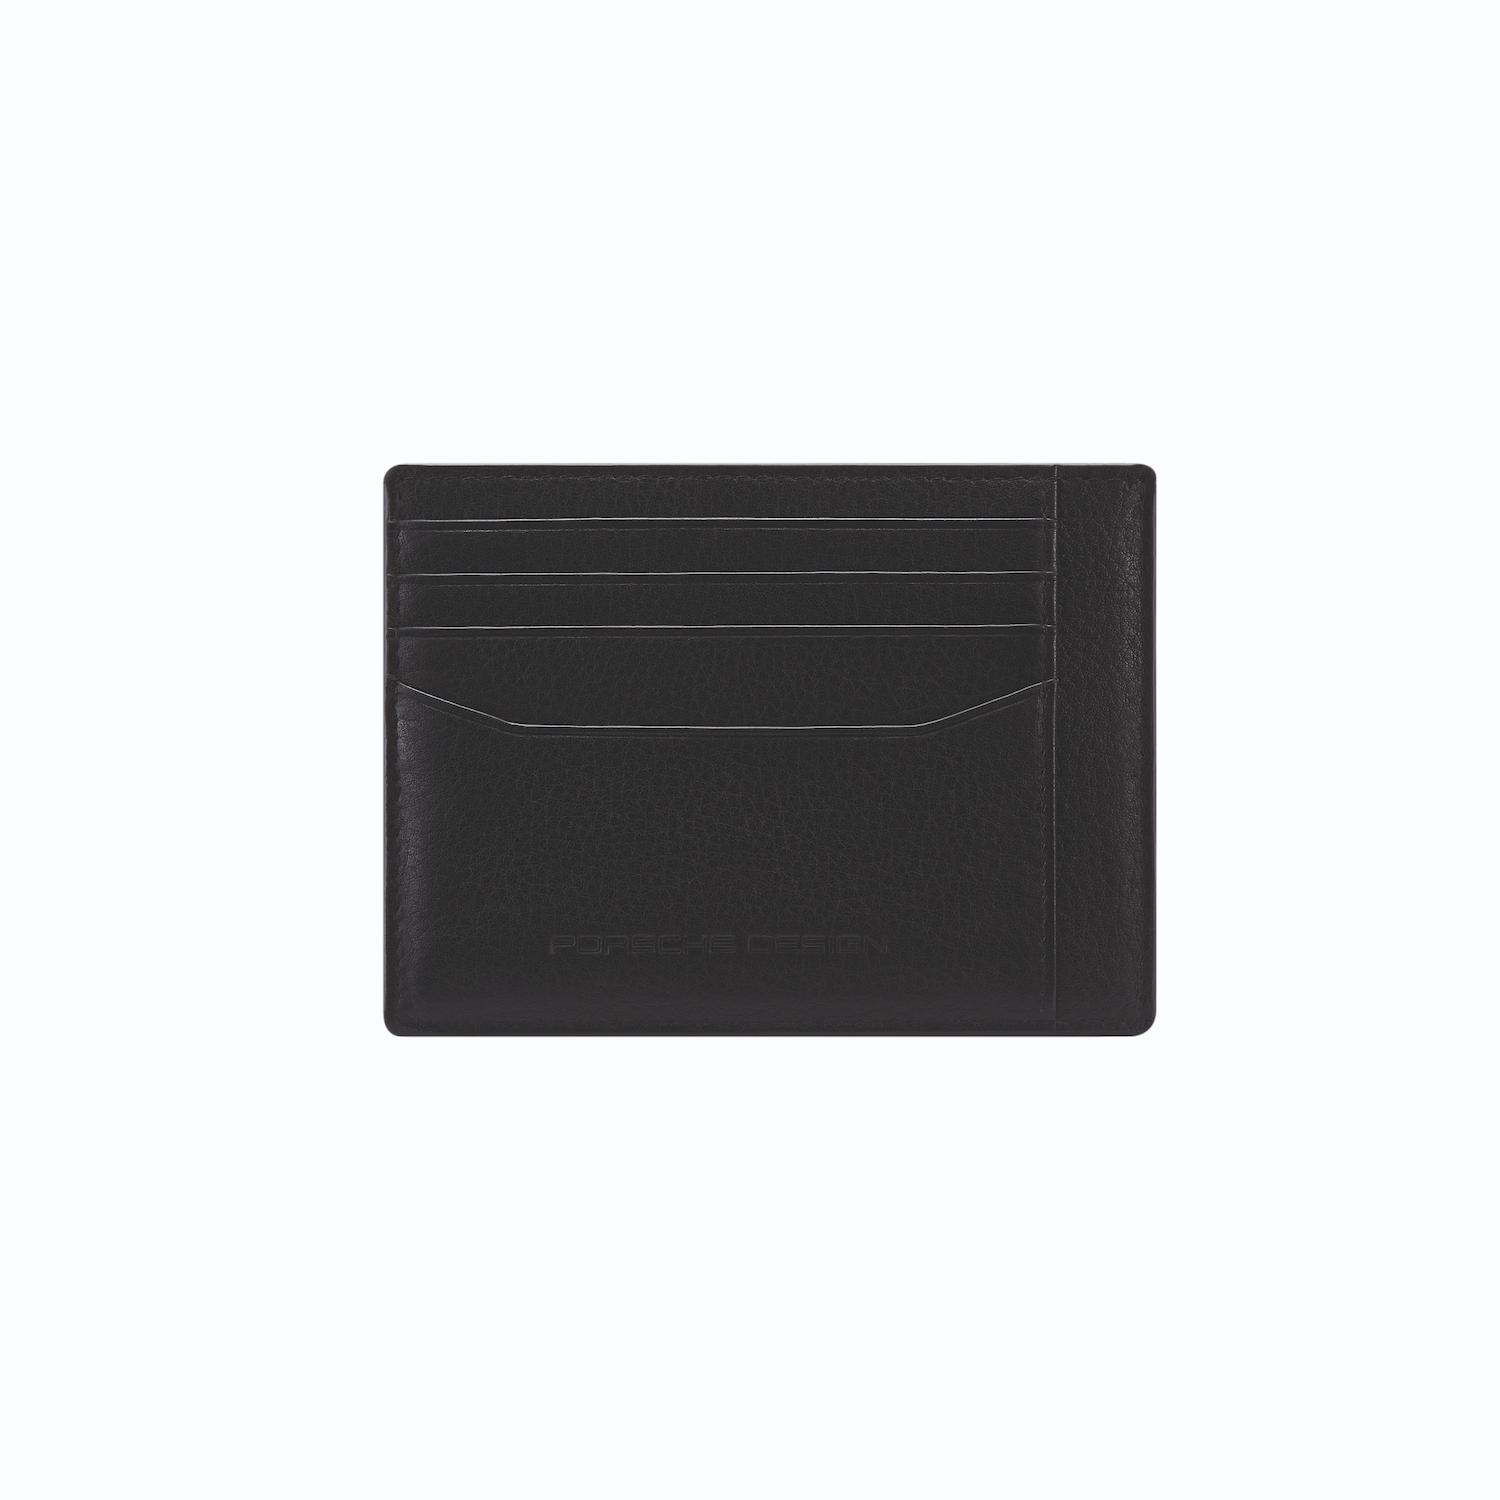 Pd Business Slg Cardholder 4 CC by Brics (Color: Black)